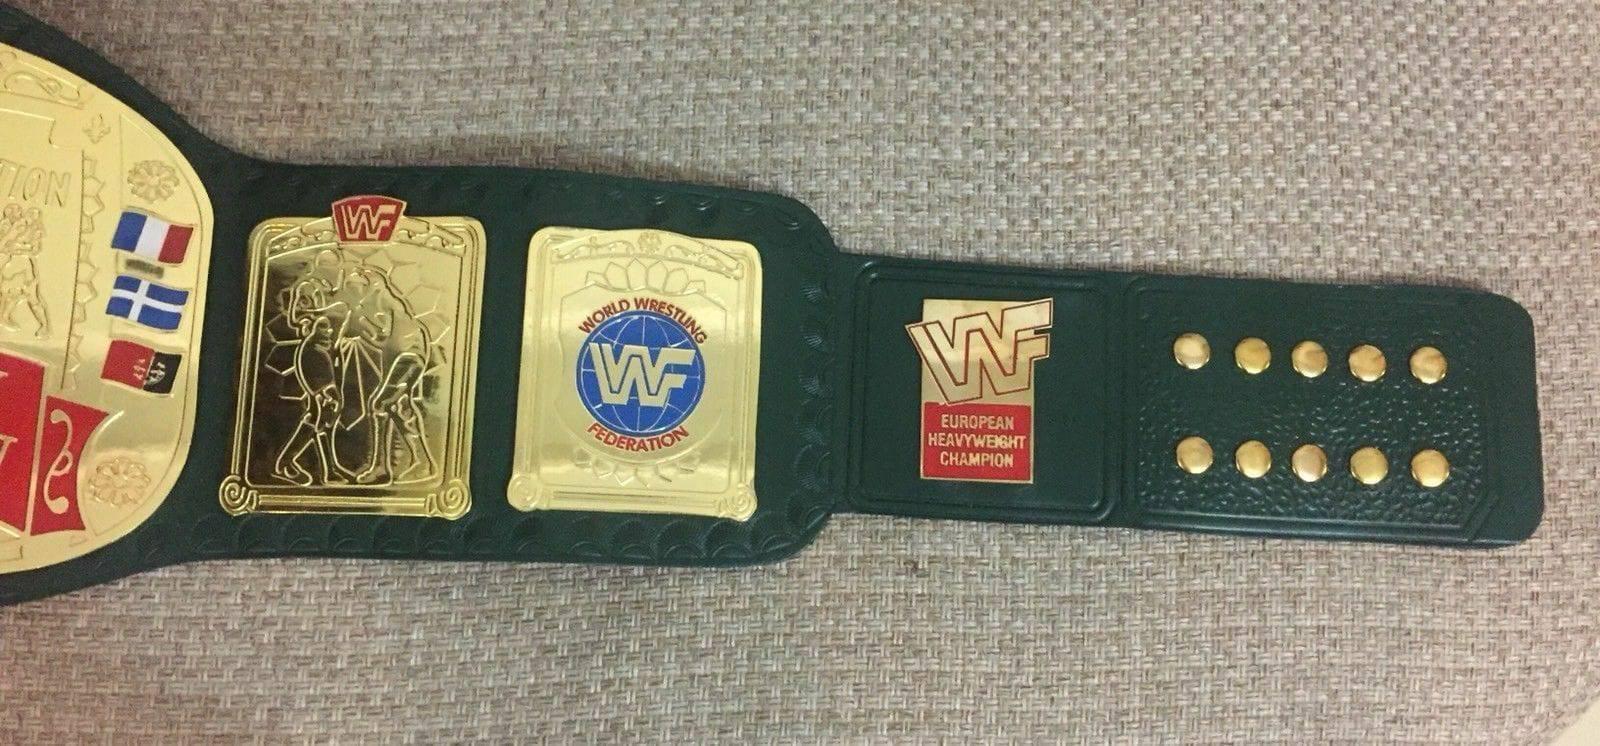 WWF EUROPEAN BLOCK LOGO Brass Championship Title Belt - Zees Belts